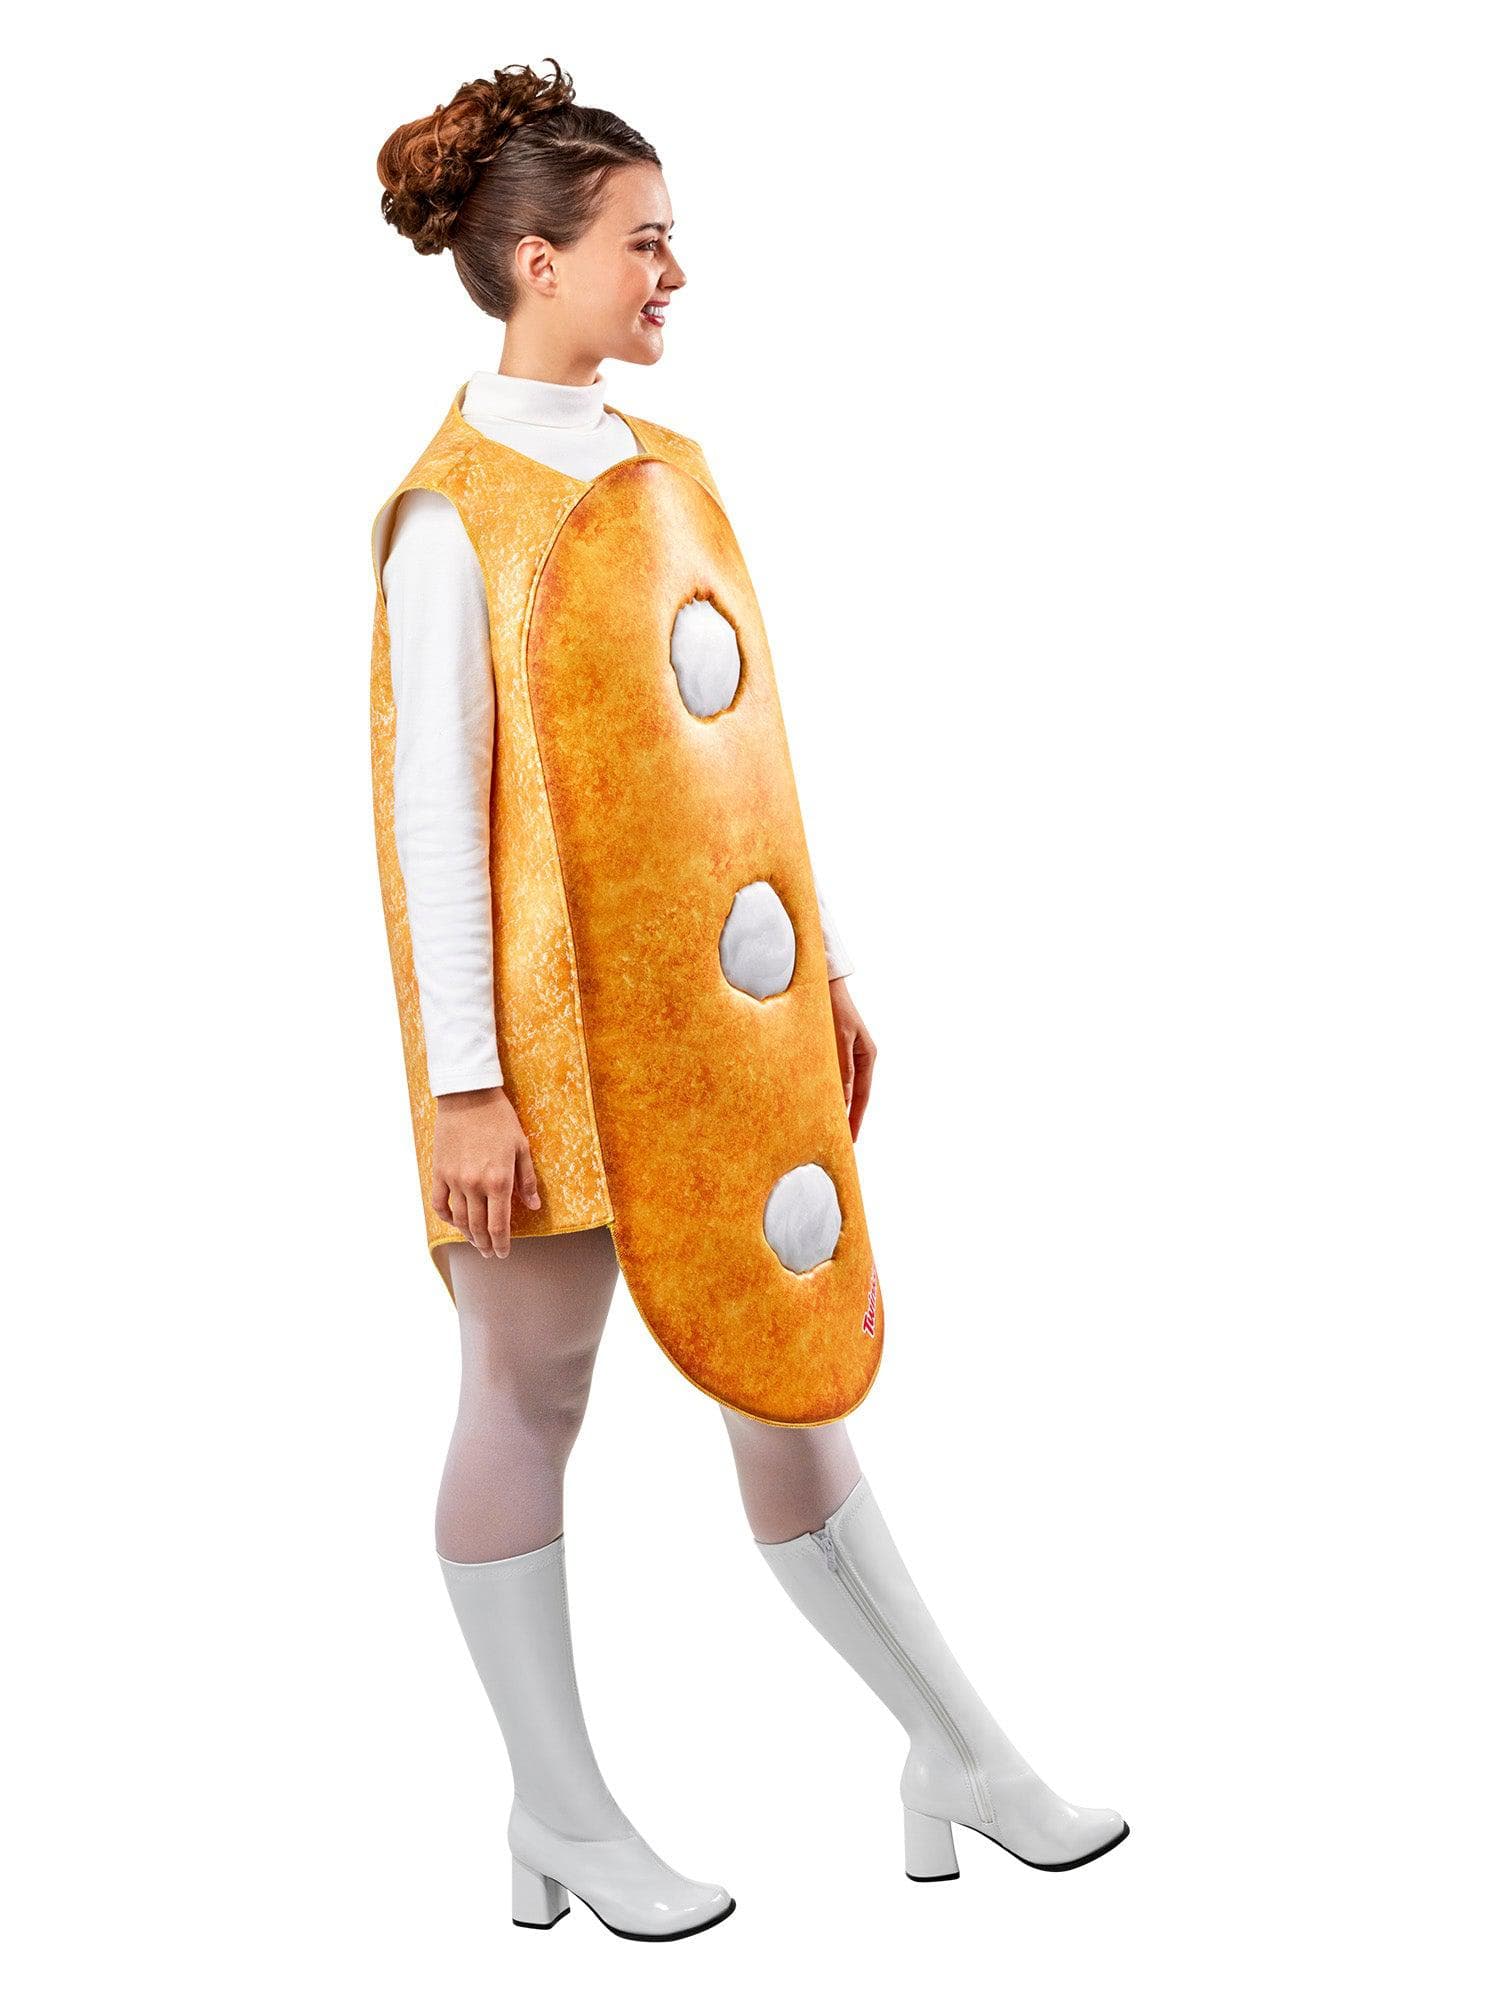 Hostess Twinkie Adult Costume - costumes.com